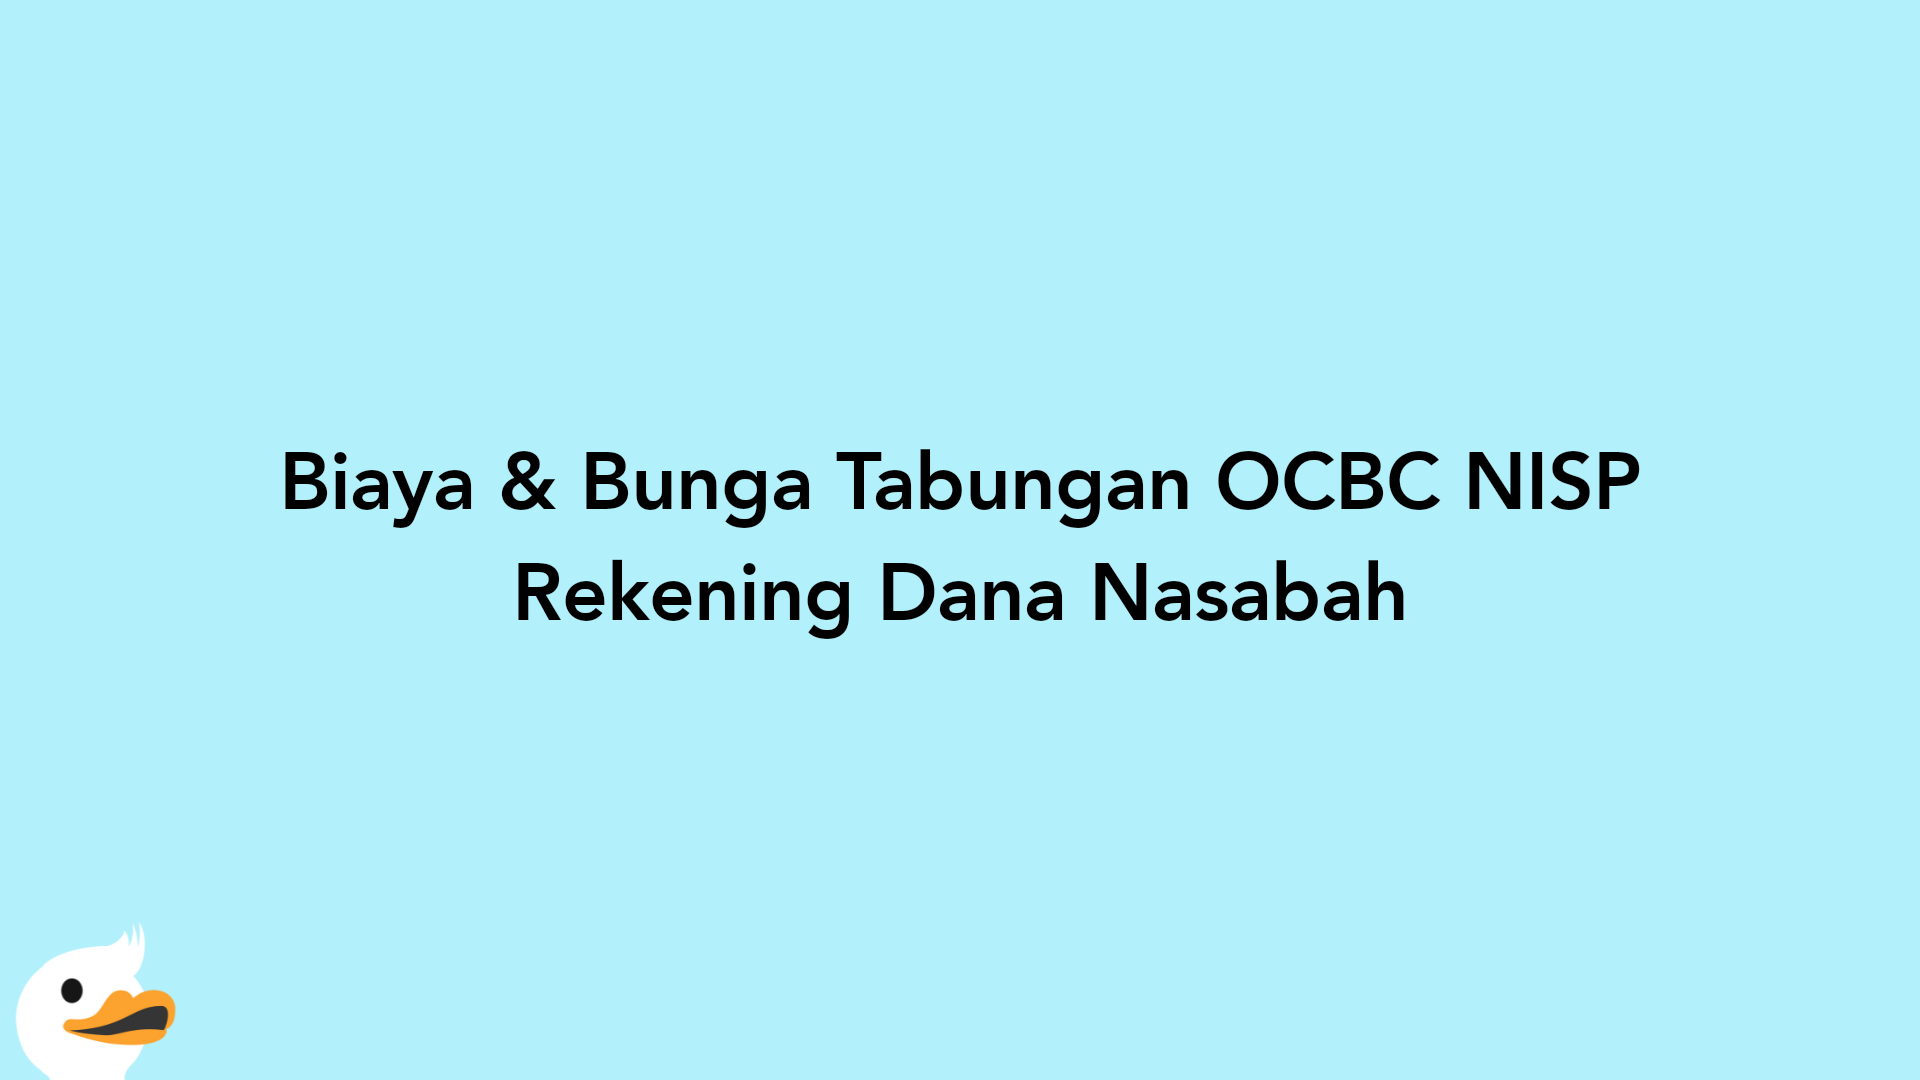 Biaya & Bunga Tabungan OCBC NISP Rekening Dana Nasabah